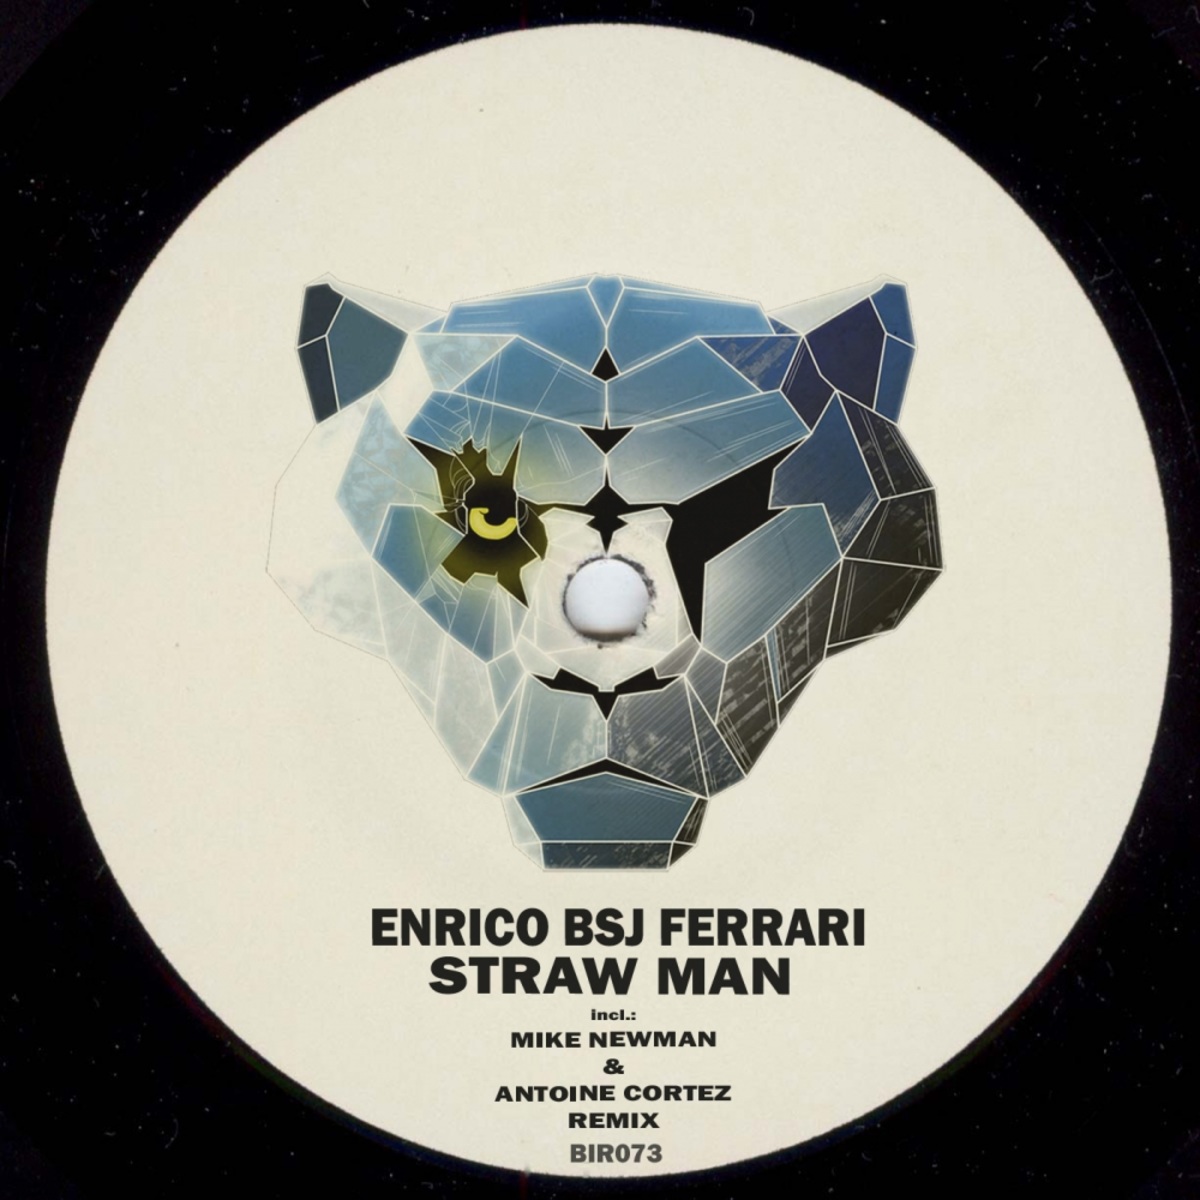 Enrico BSJ Ferrari - Straw Man / Bagira Ice Records